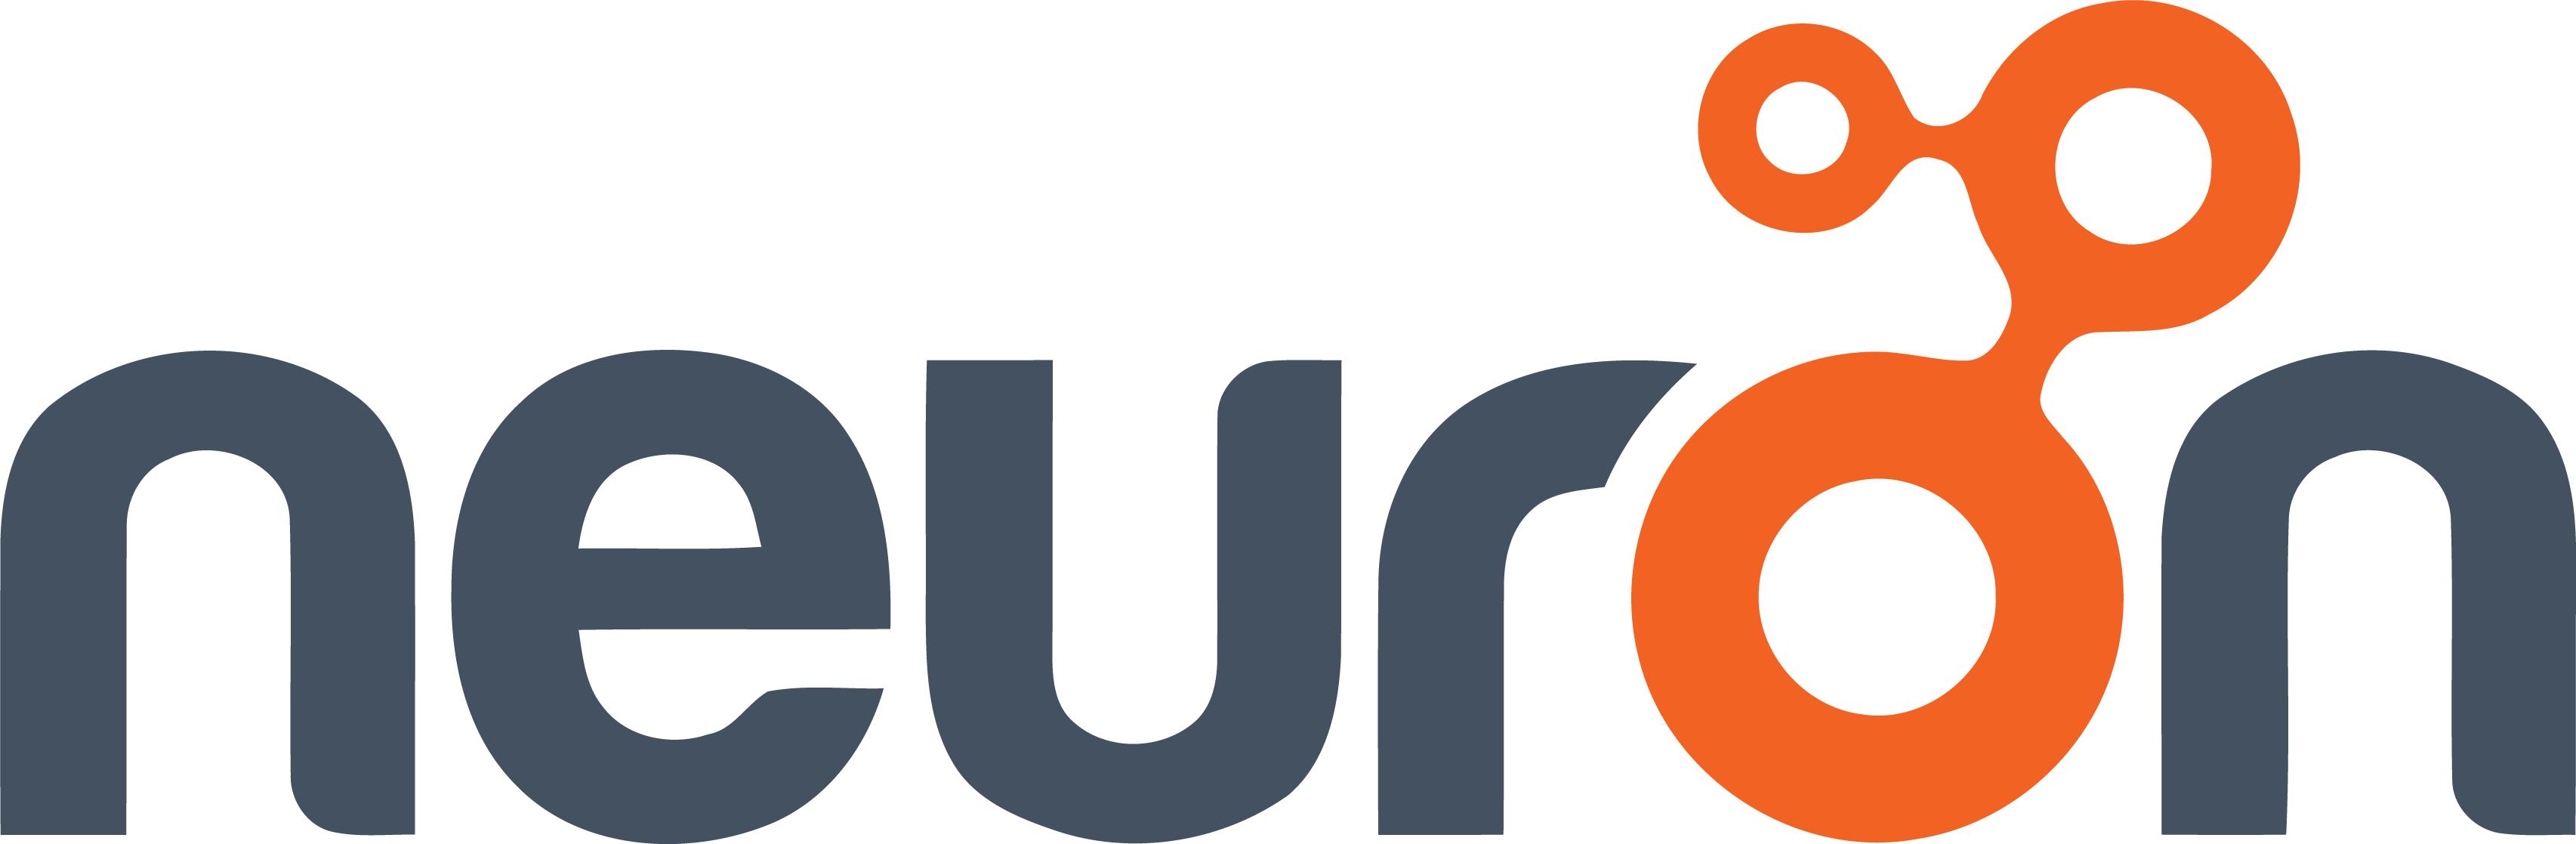 neuron logo